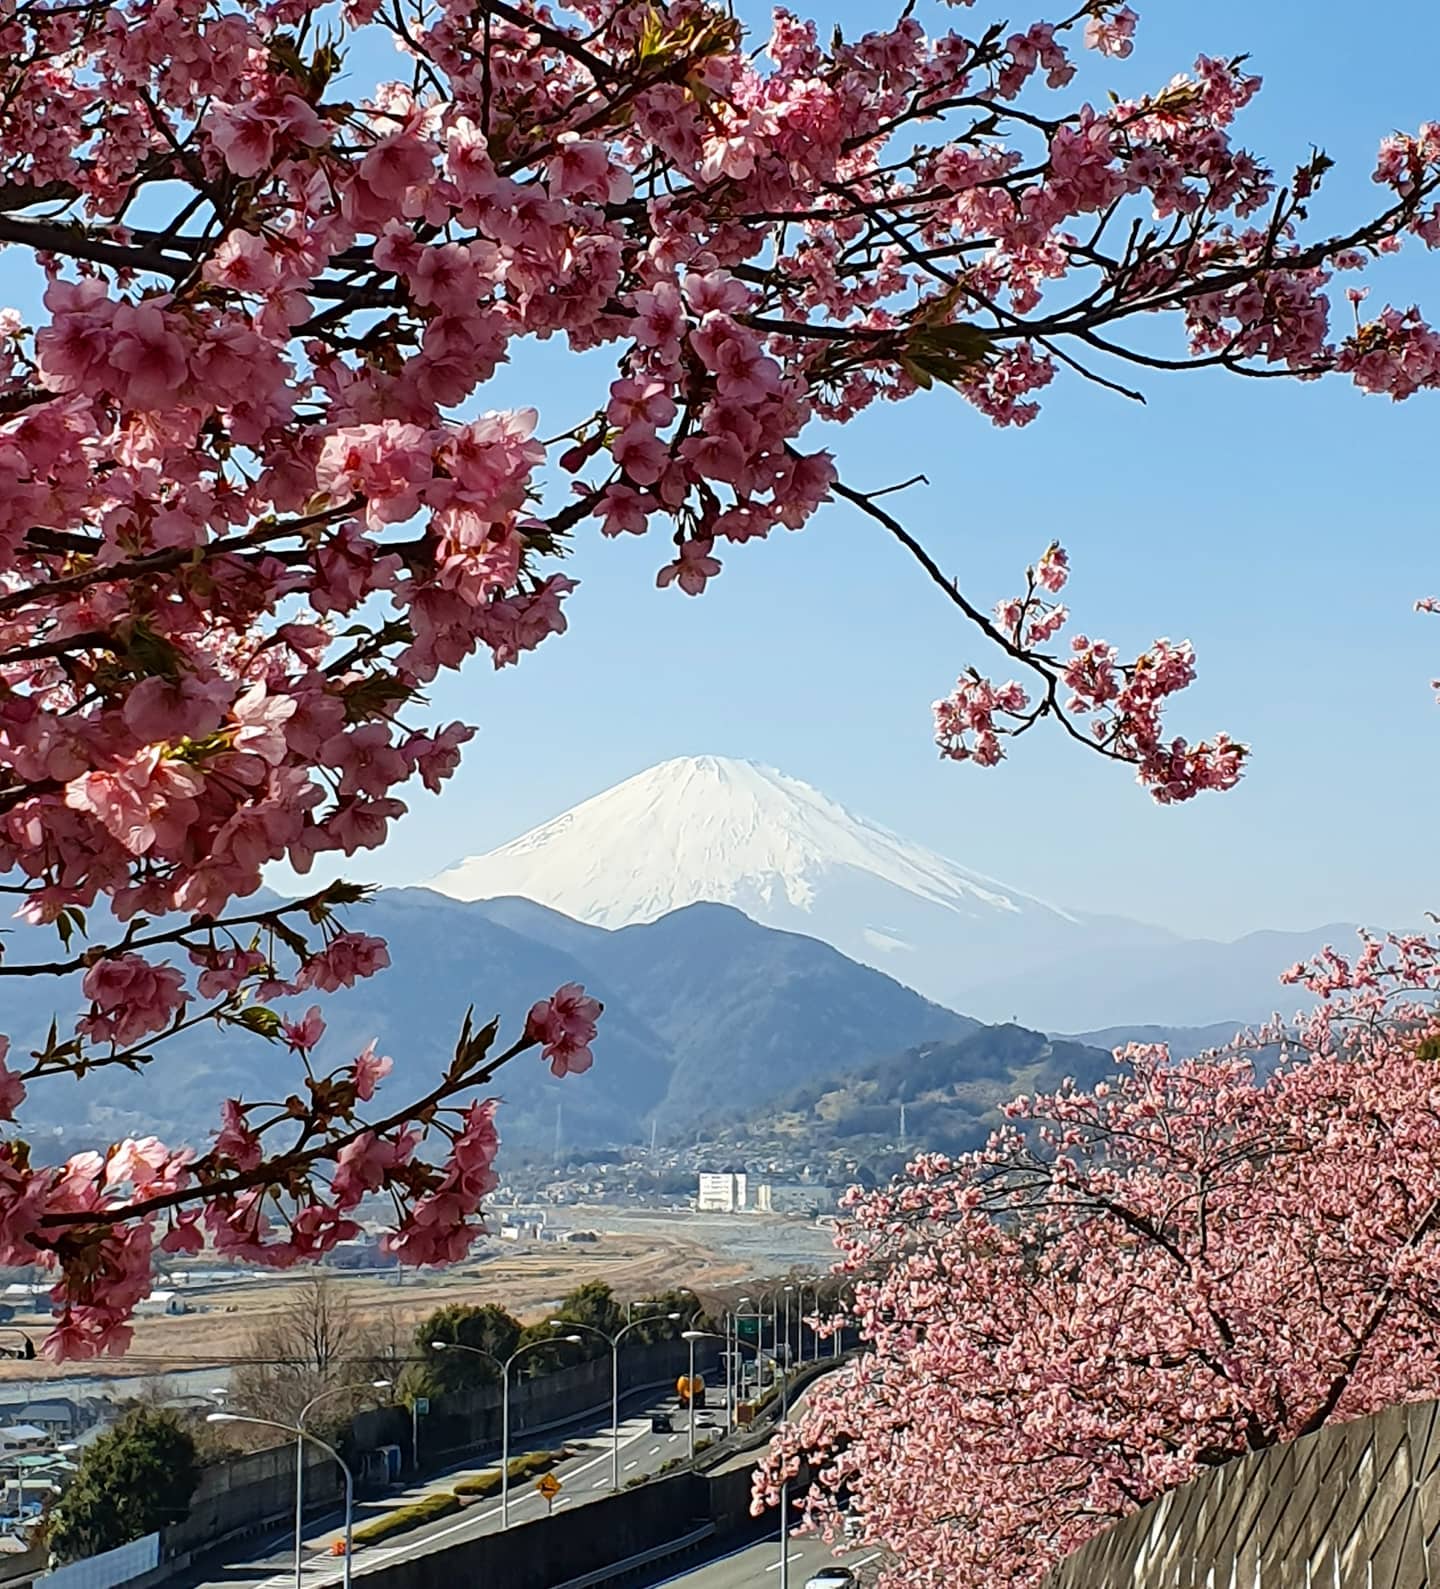 Early cherry blossom and Mt Fuji, more photos in the new blog post 🌸🗻📸
.
.
.
.
.
#iconic #view #cherryblossom #kawazuzakura #mtfuji #fujisan #springiscoming #springisintheair #weekend #traveljapan #ig_japan #beautiful  #nature #outdoors #naturephotography #japan #japon #printemps #fleurdecerisier #週末 #富士山 #桜の花